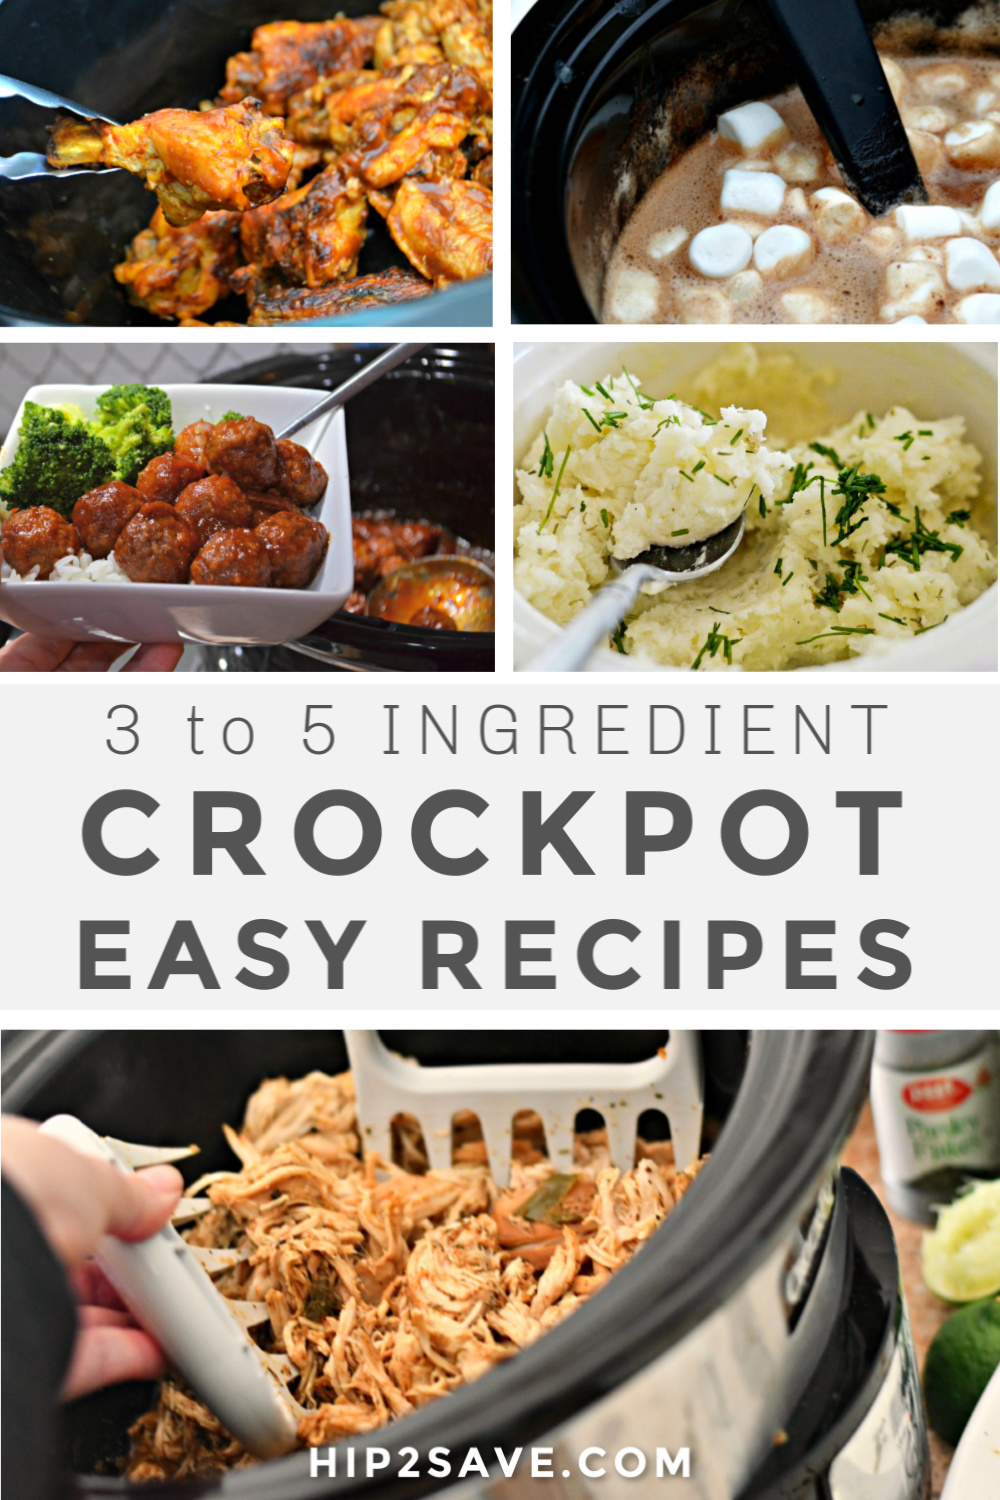 25 Easy 3 Ingredient Crock Pot Slow Cooker Recipes Hip2save